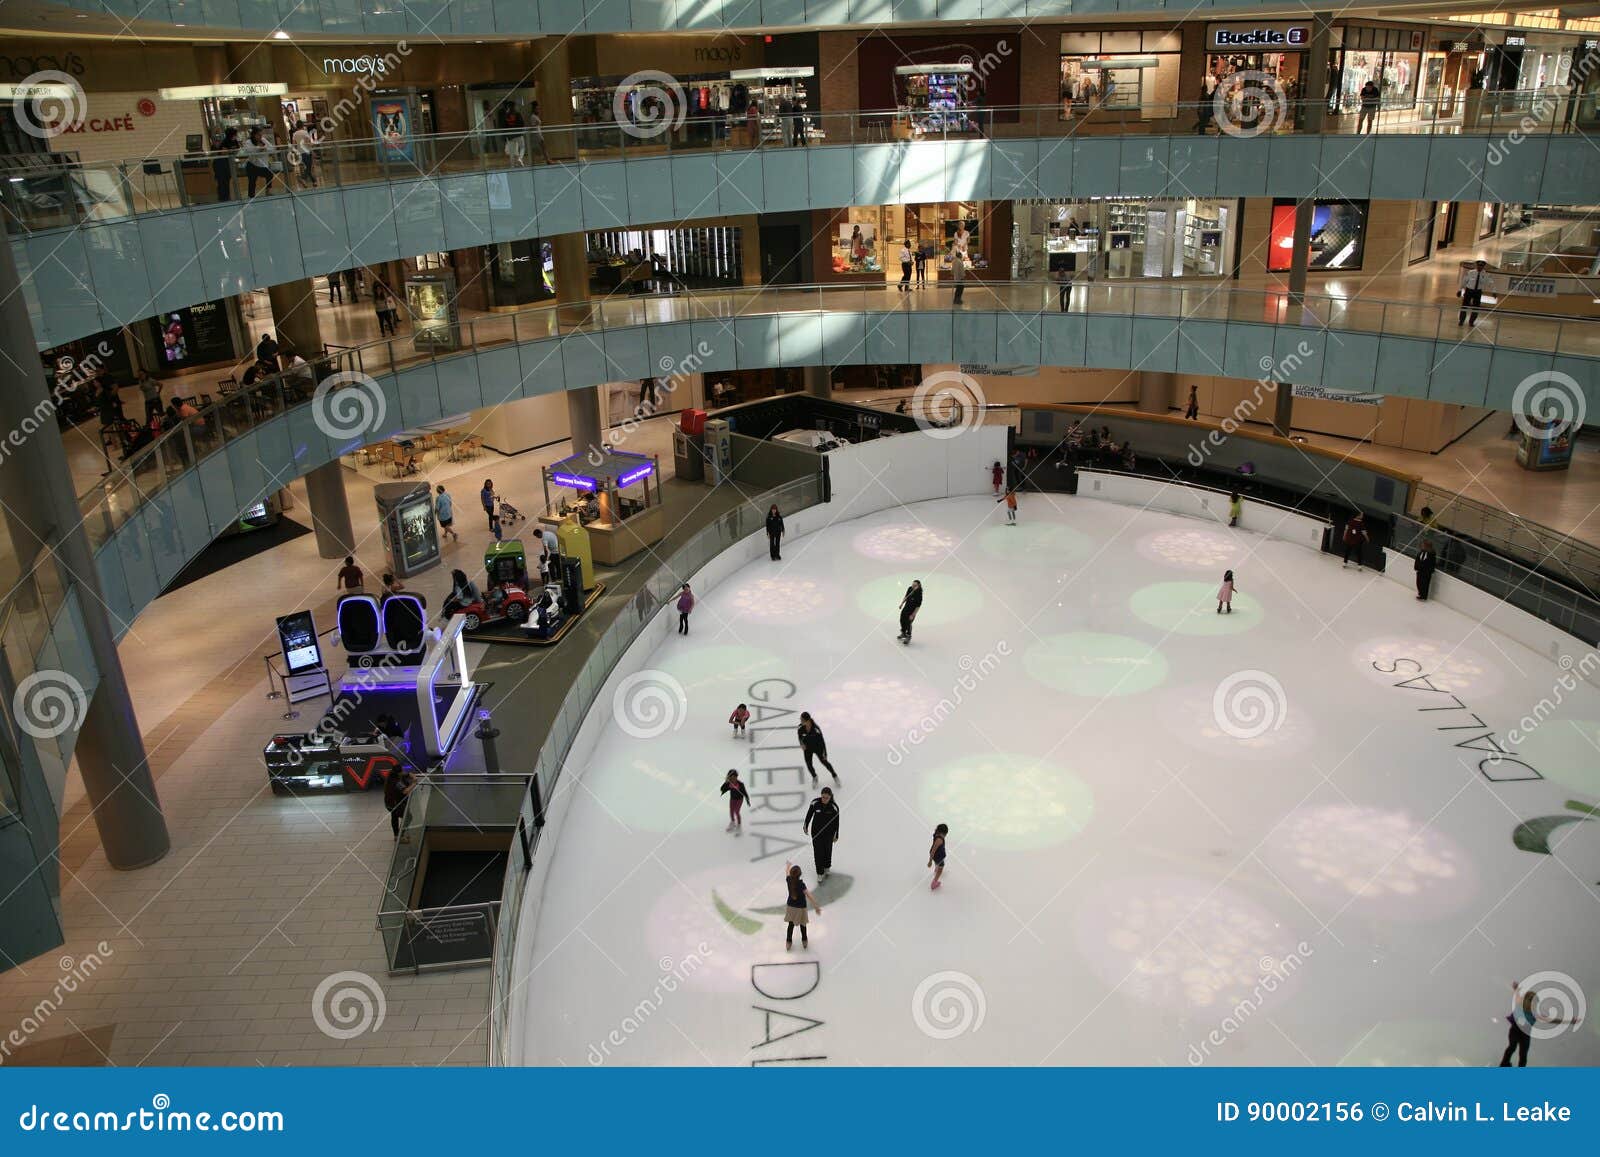 Galleria is the second best mall in Dallas  Galleria mall, House styles,  Dallas texas